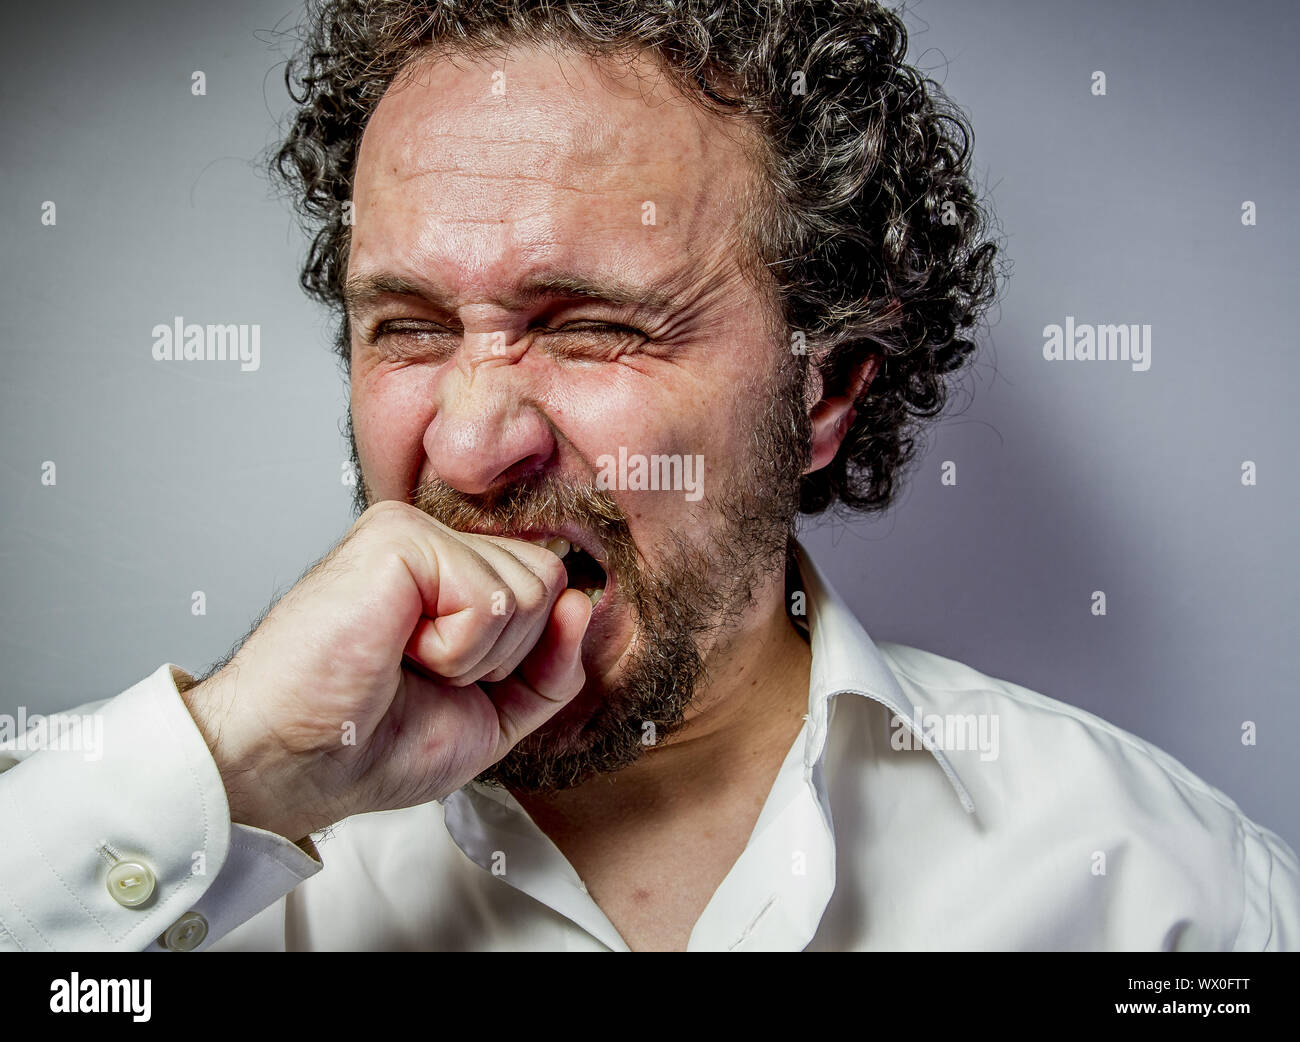 derision, man with intense expression, white shirt Stock Photo